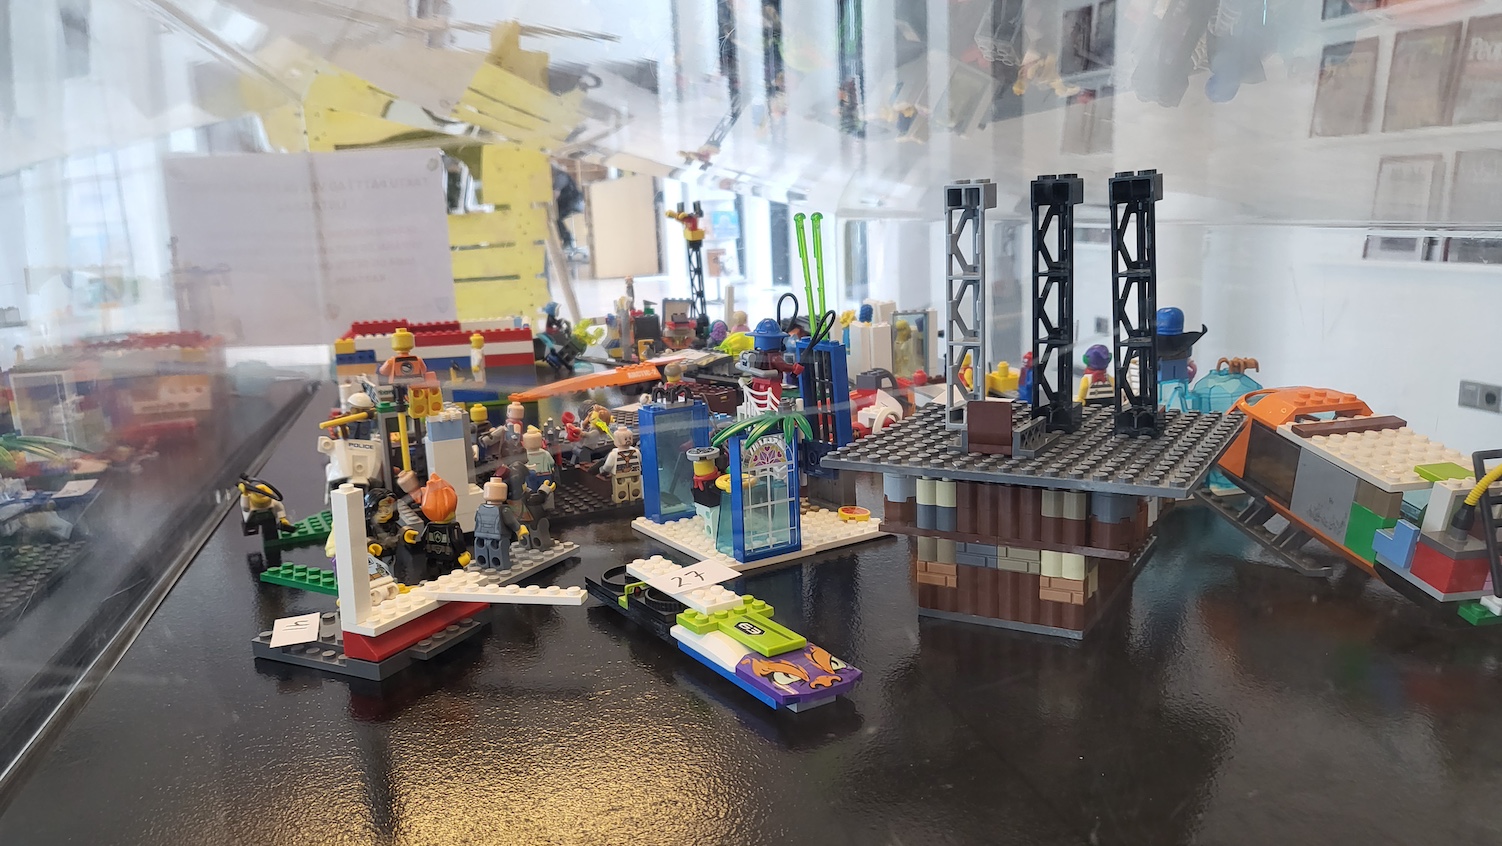 Lego-artwork on display